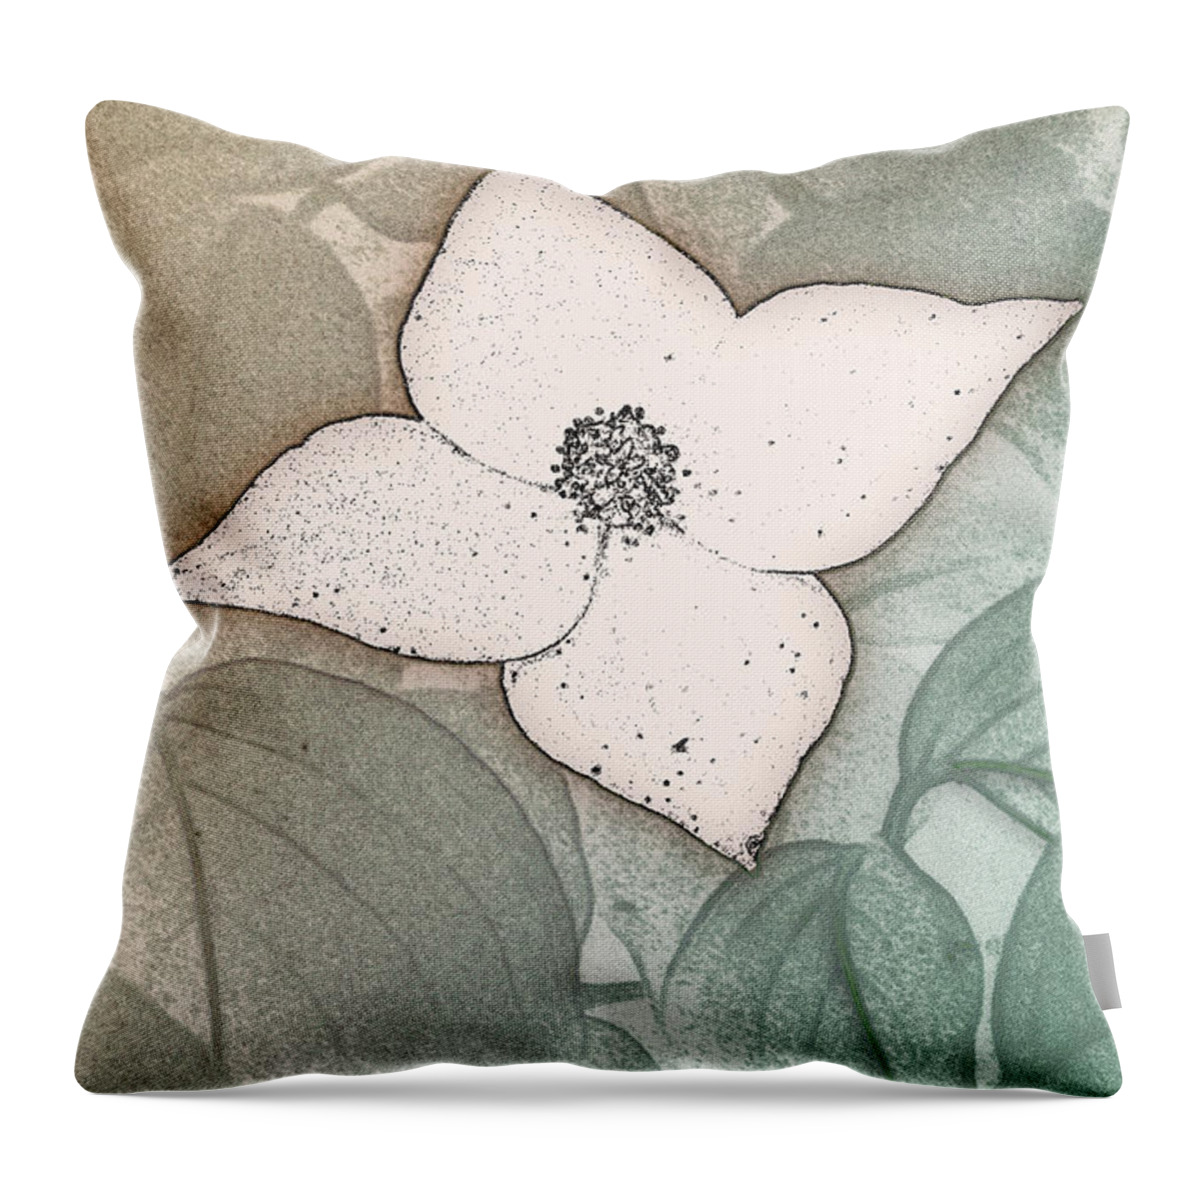 Kousa Throw Pillow featuring the digital art Dogwood Flower Stencil on Sandstone by Jason Fink